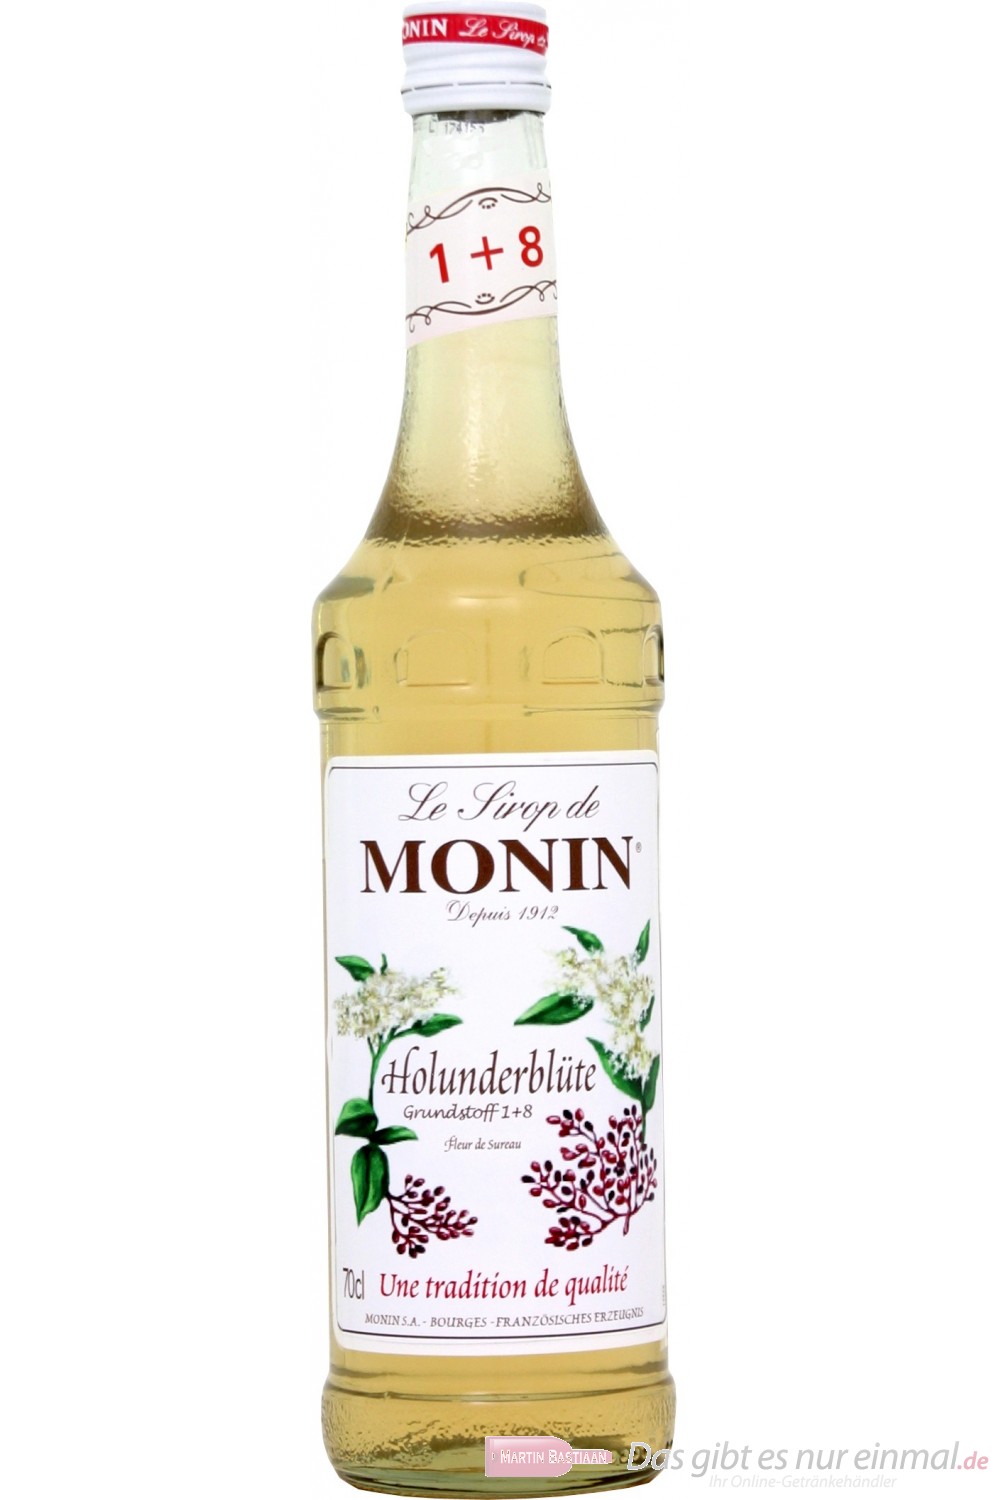 Le Sirop de Monin Holunderblüte Sirup 1:8 0,7l Flasche